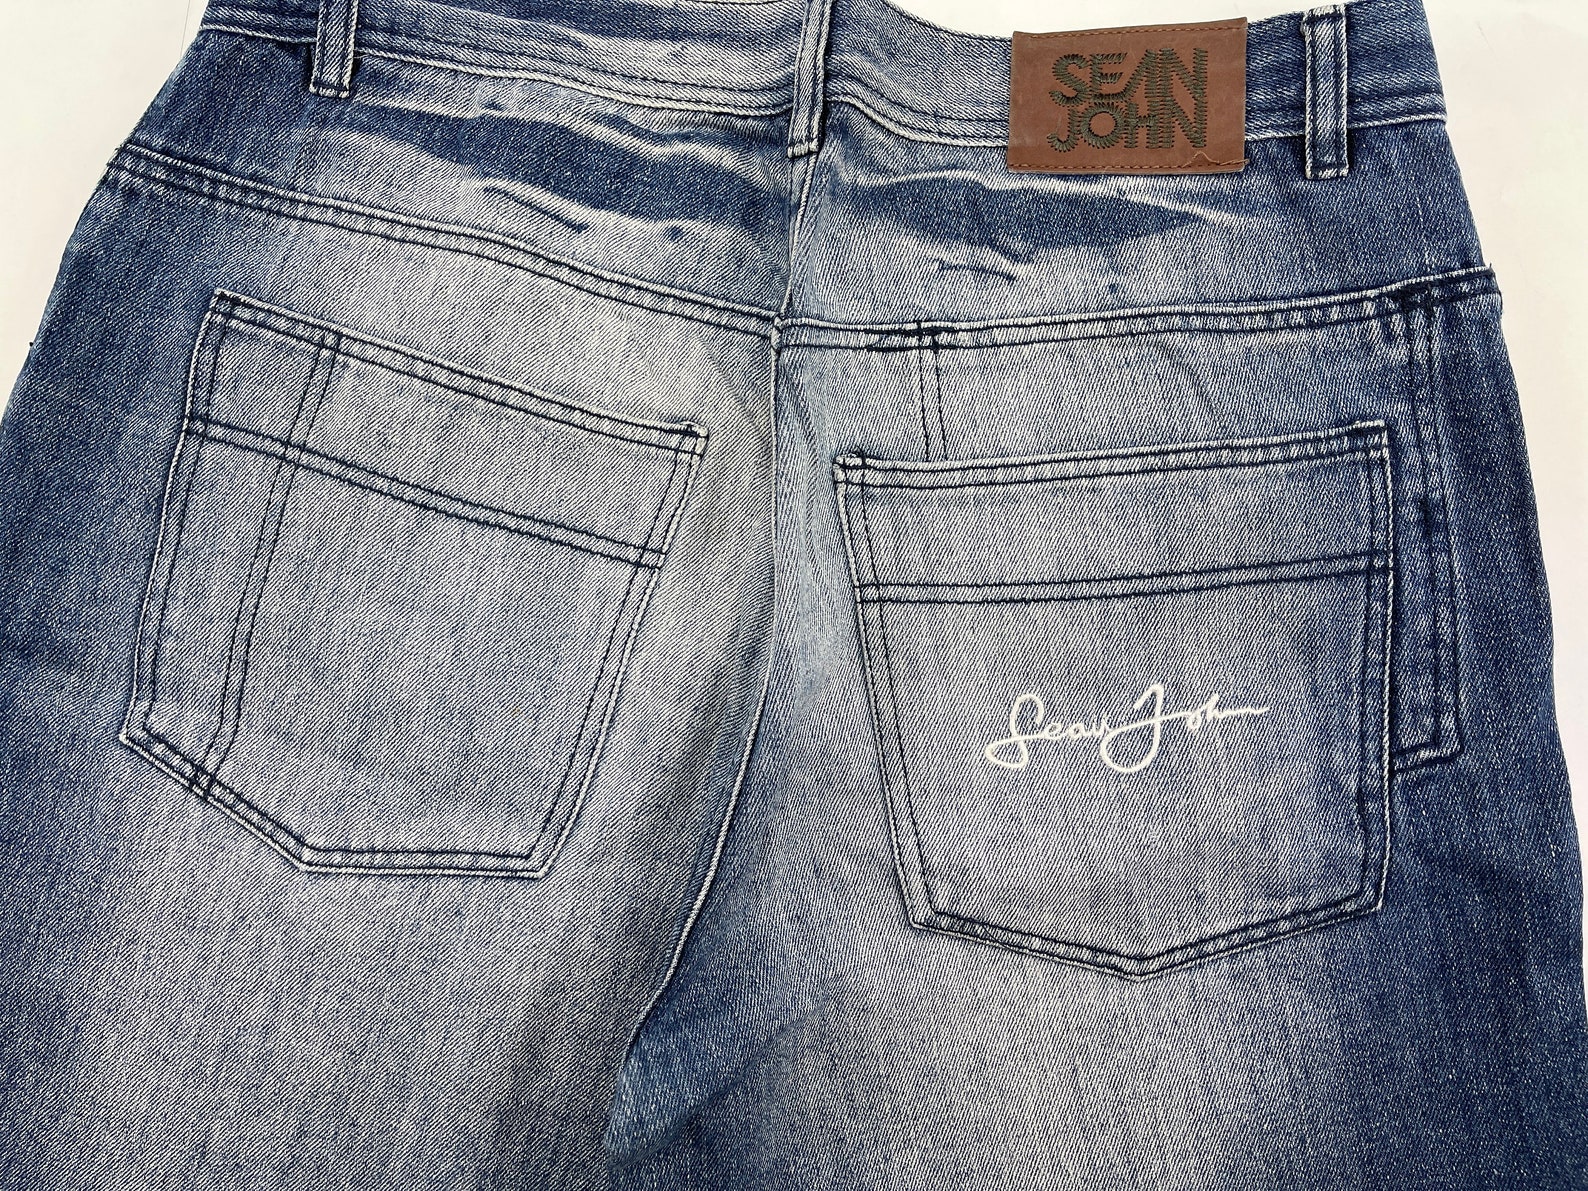 Sean John Jeans Blue Vintage Baggy Pants 90s Hip Hop - Etsy